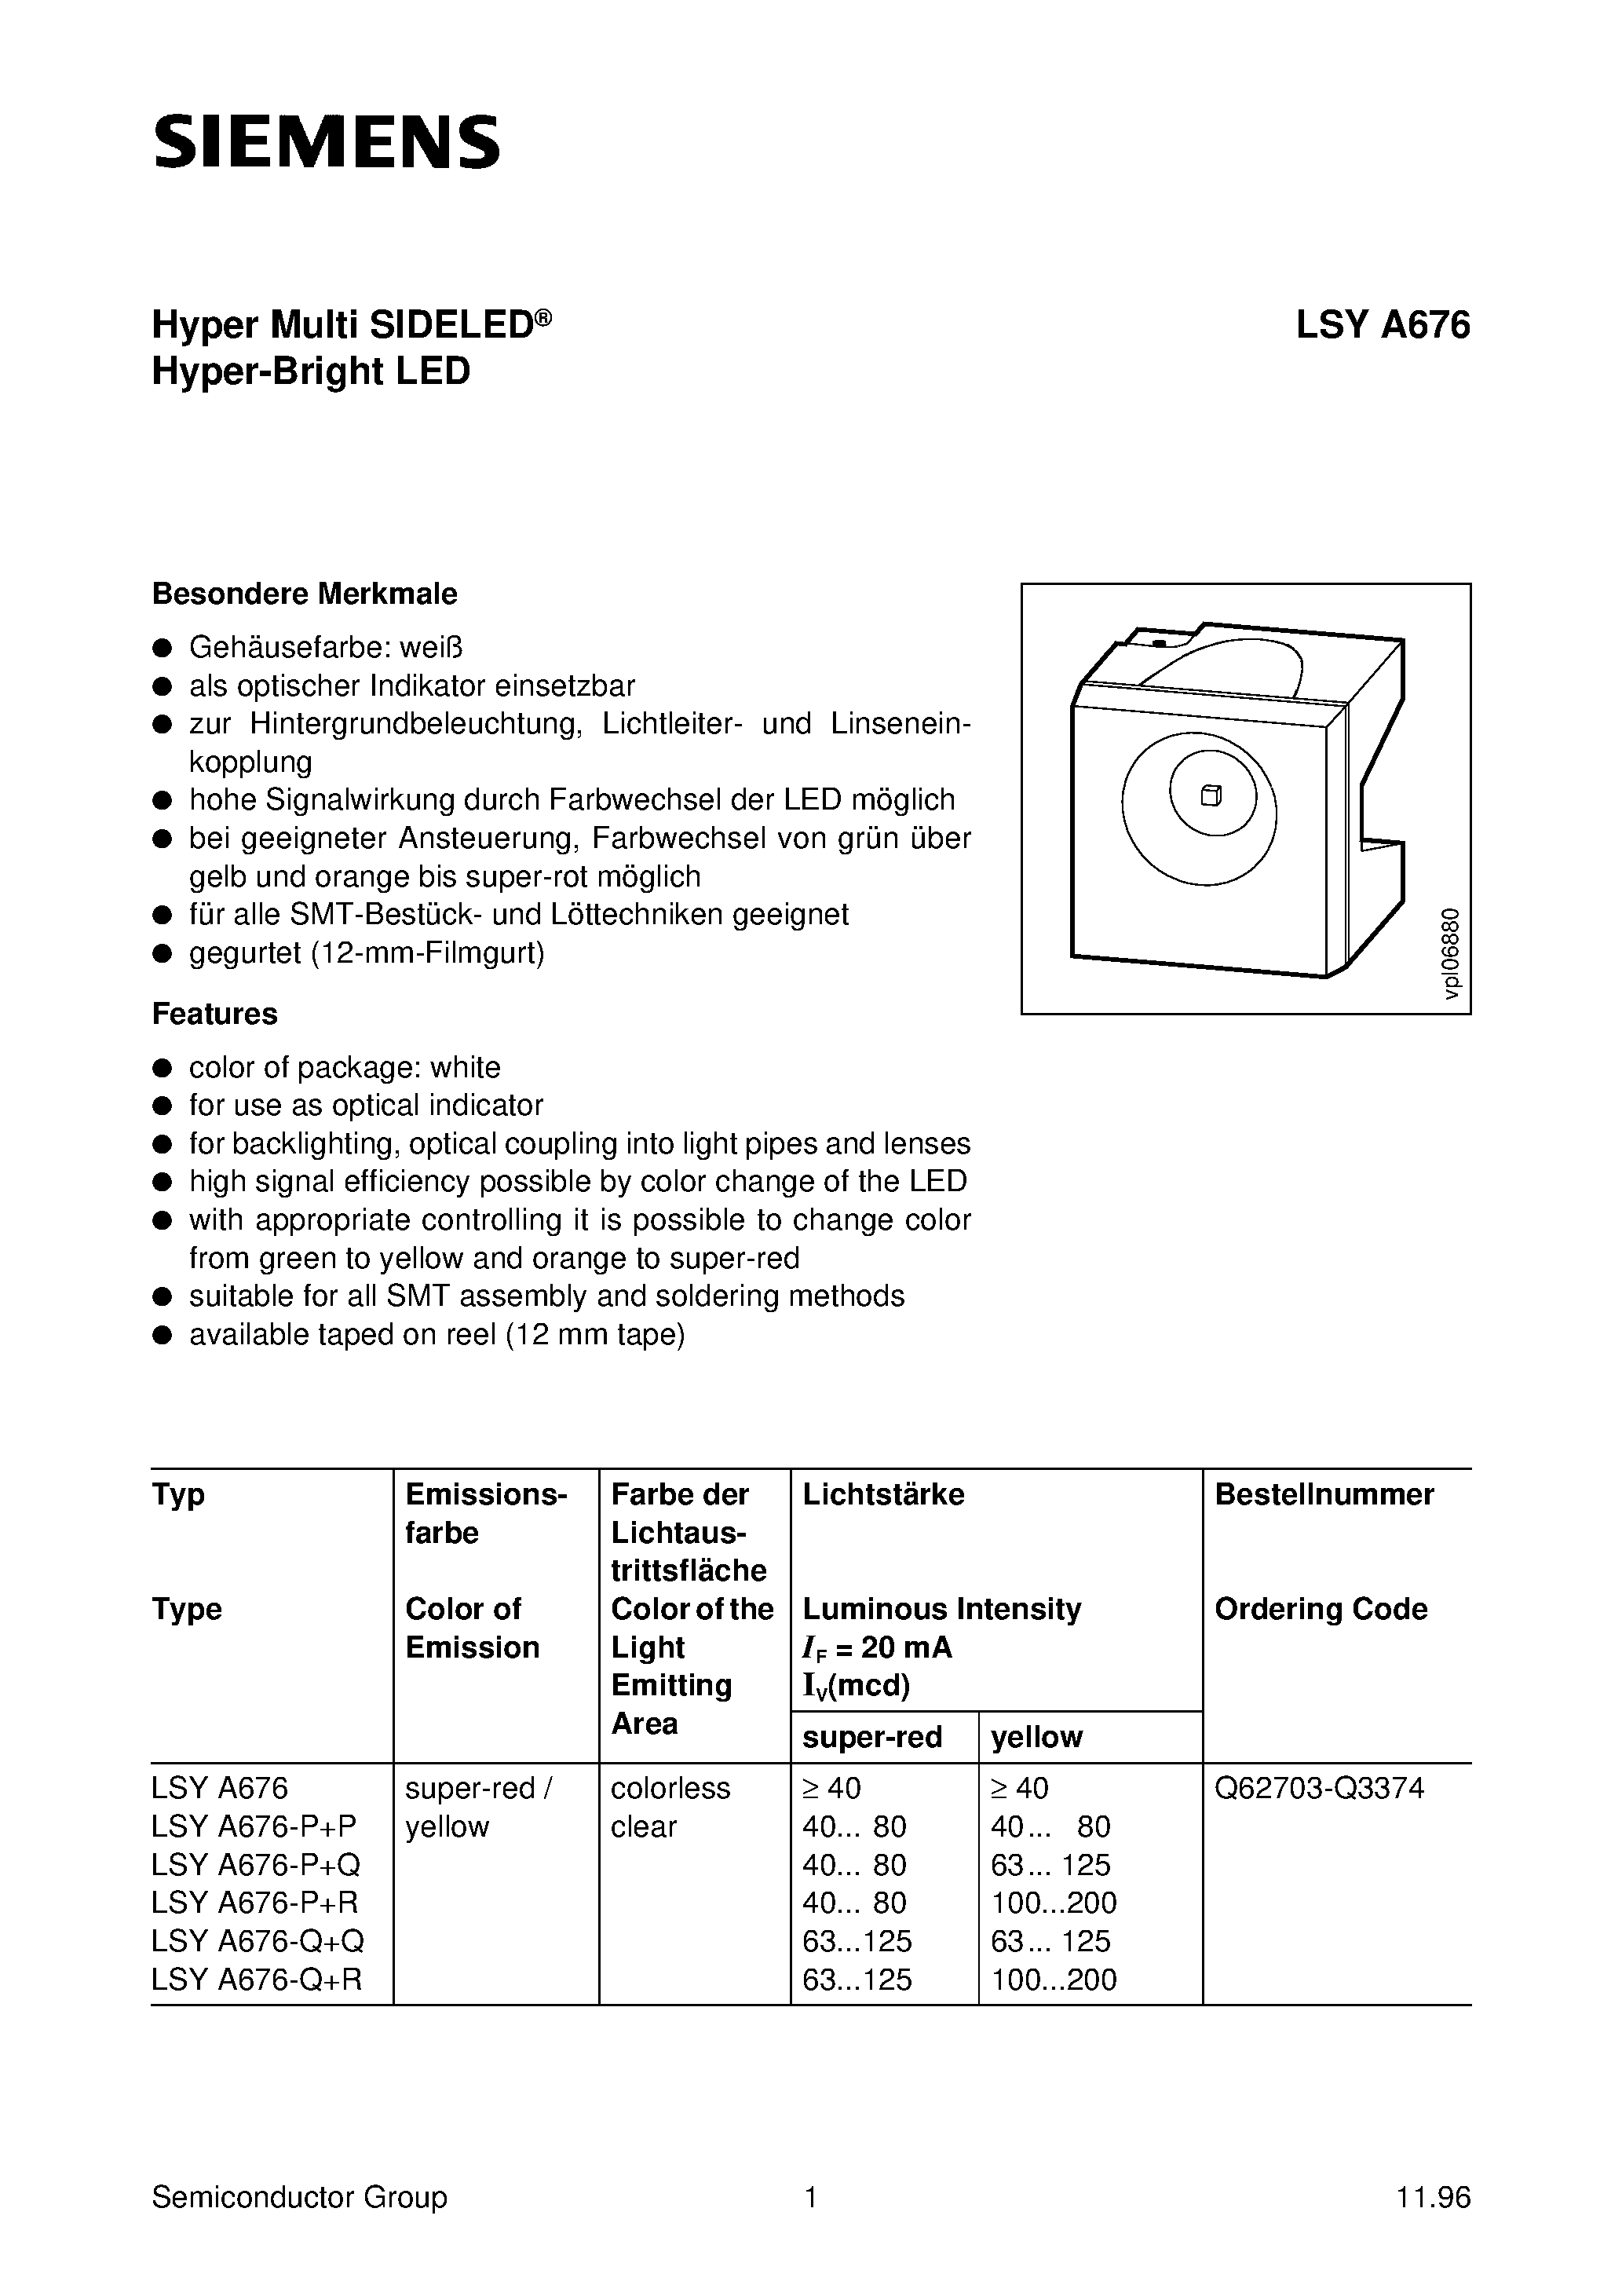 Datasheet LSYA676-P+P - Hyper Multi SIDELED Hyper-Bright LED page 1